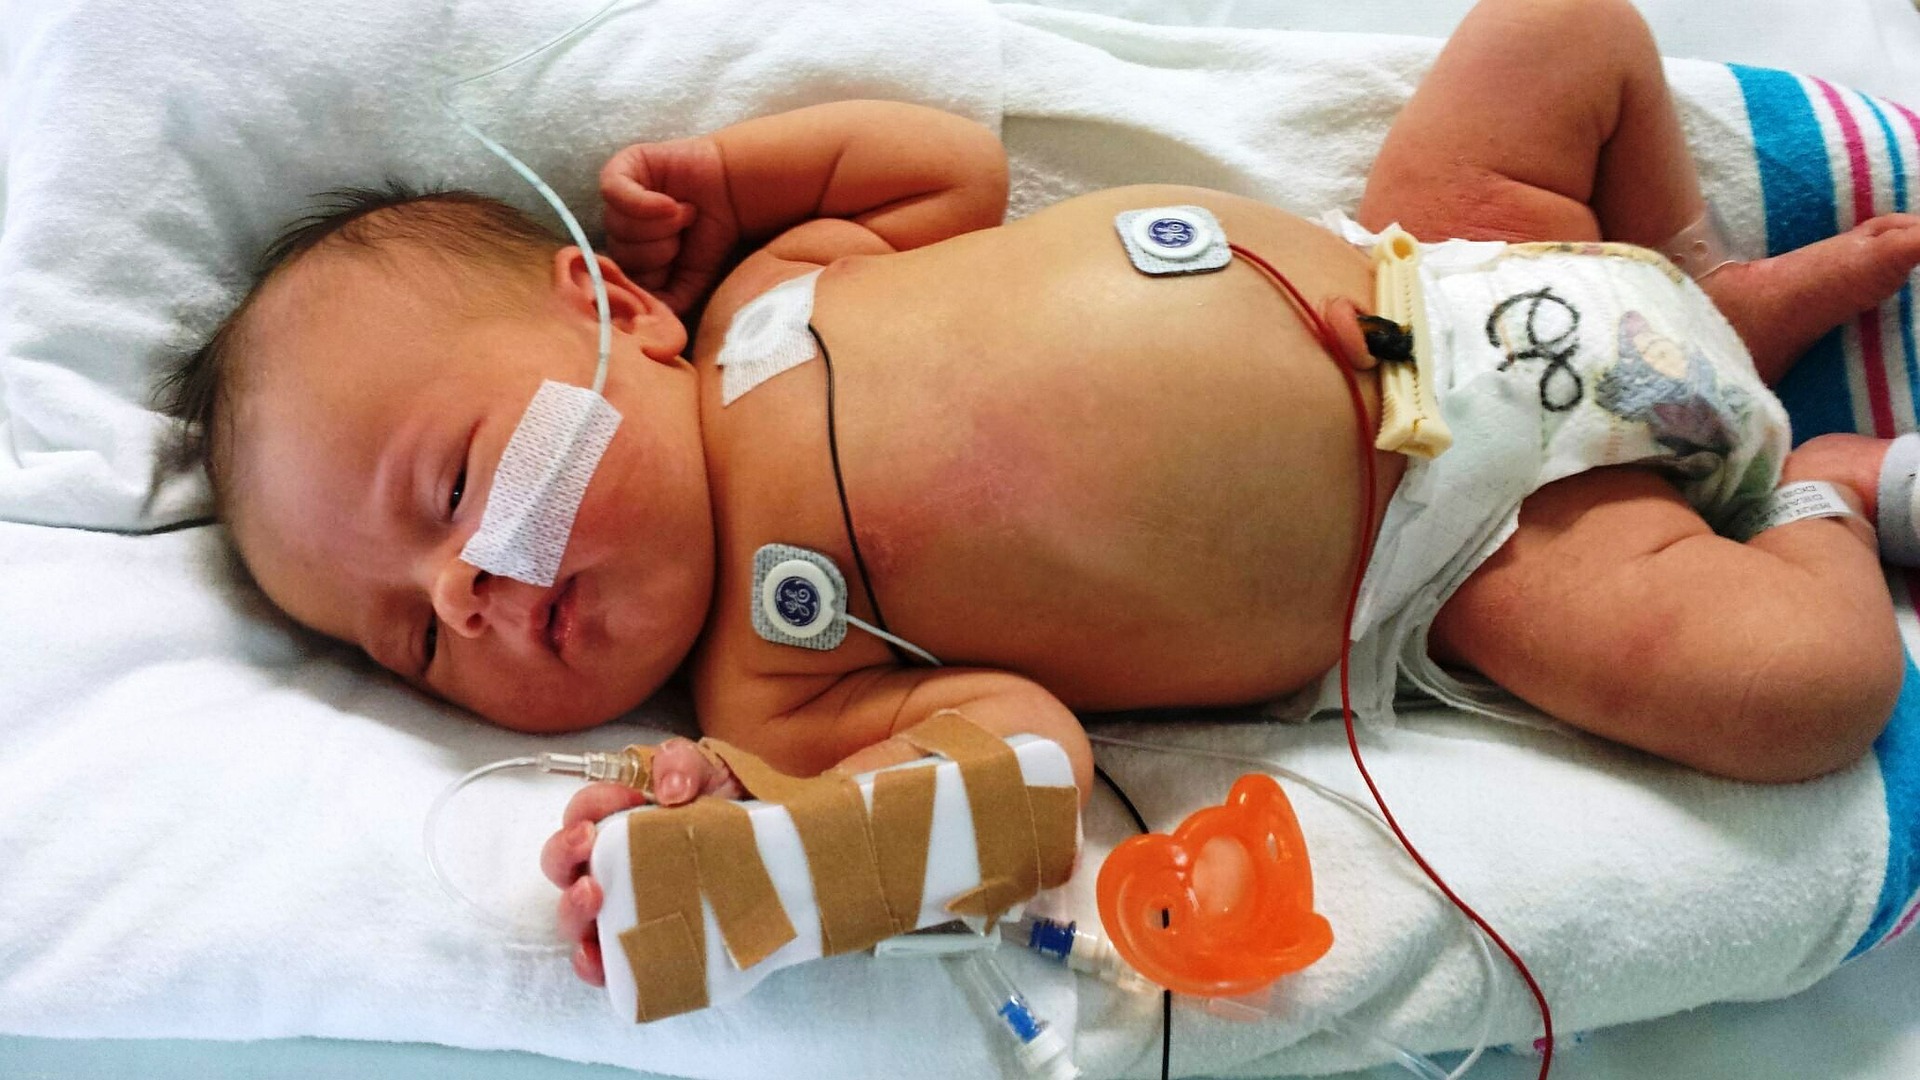 Saving Lives of Premature Babies